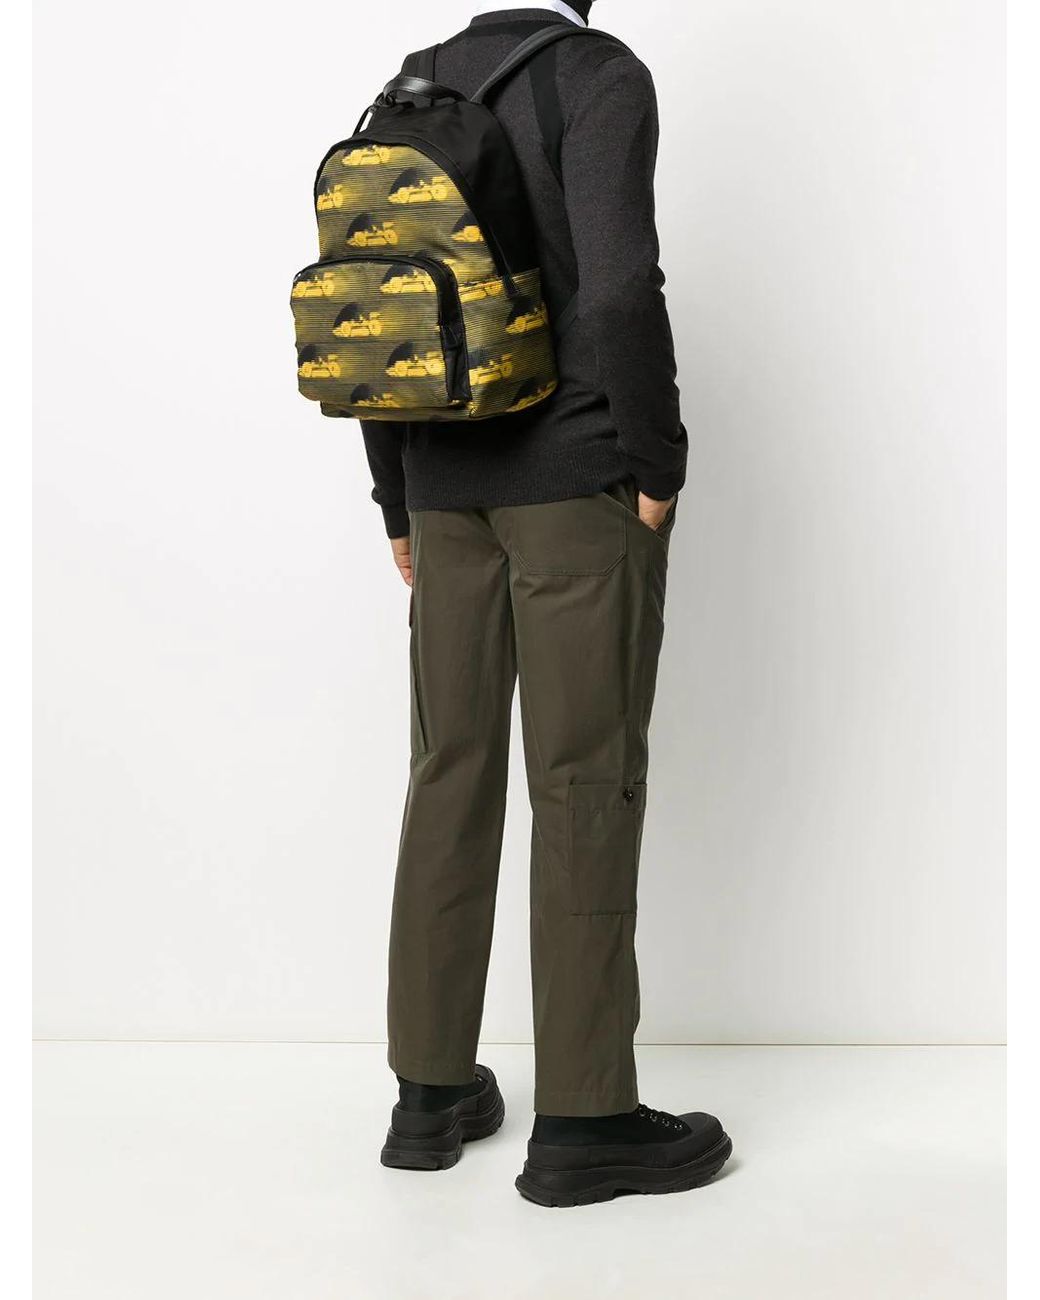 Prada Leather Backpack Race Car-print Backpack for Men | Lyst